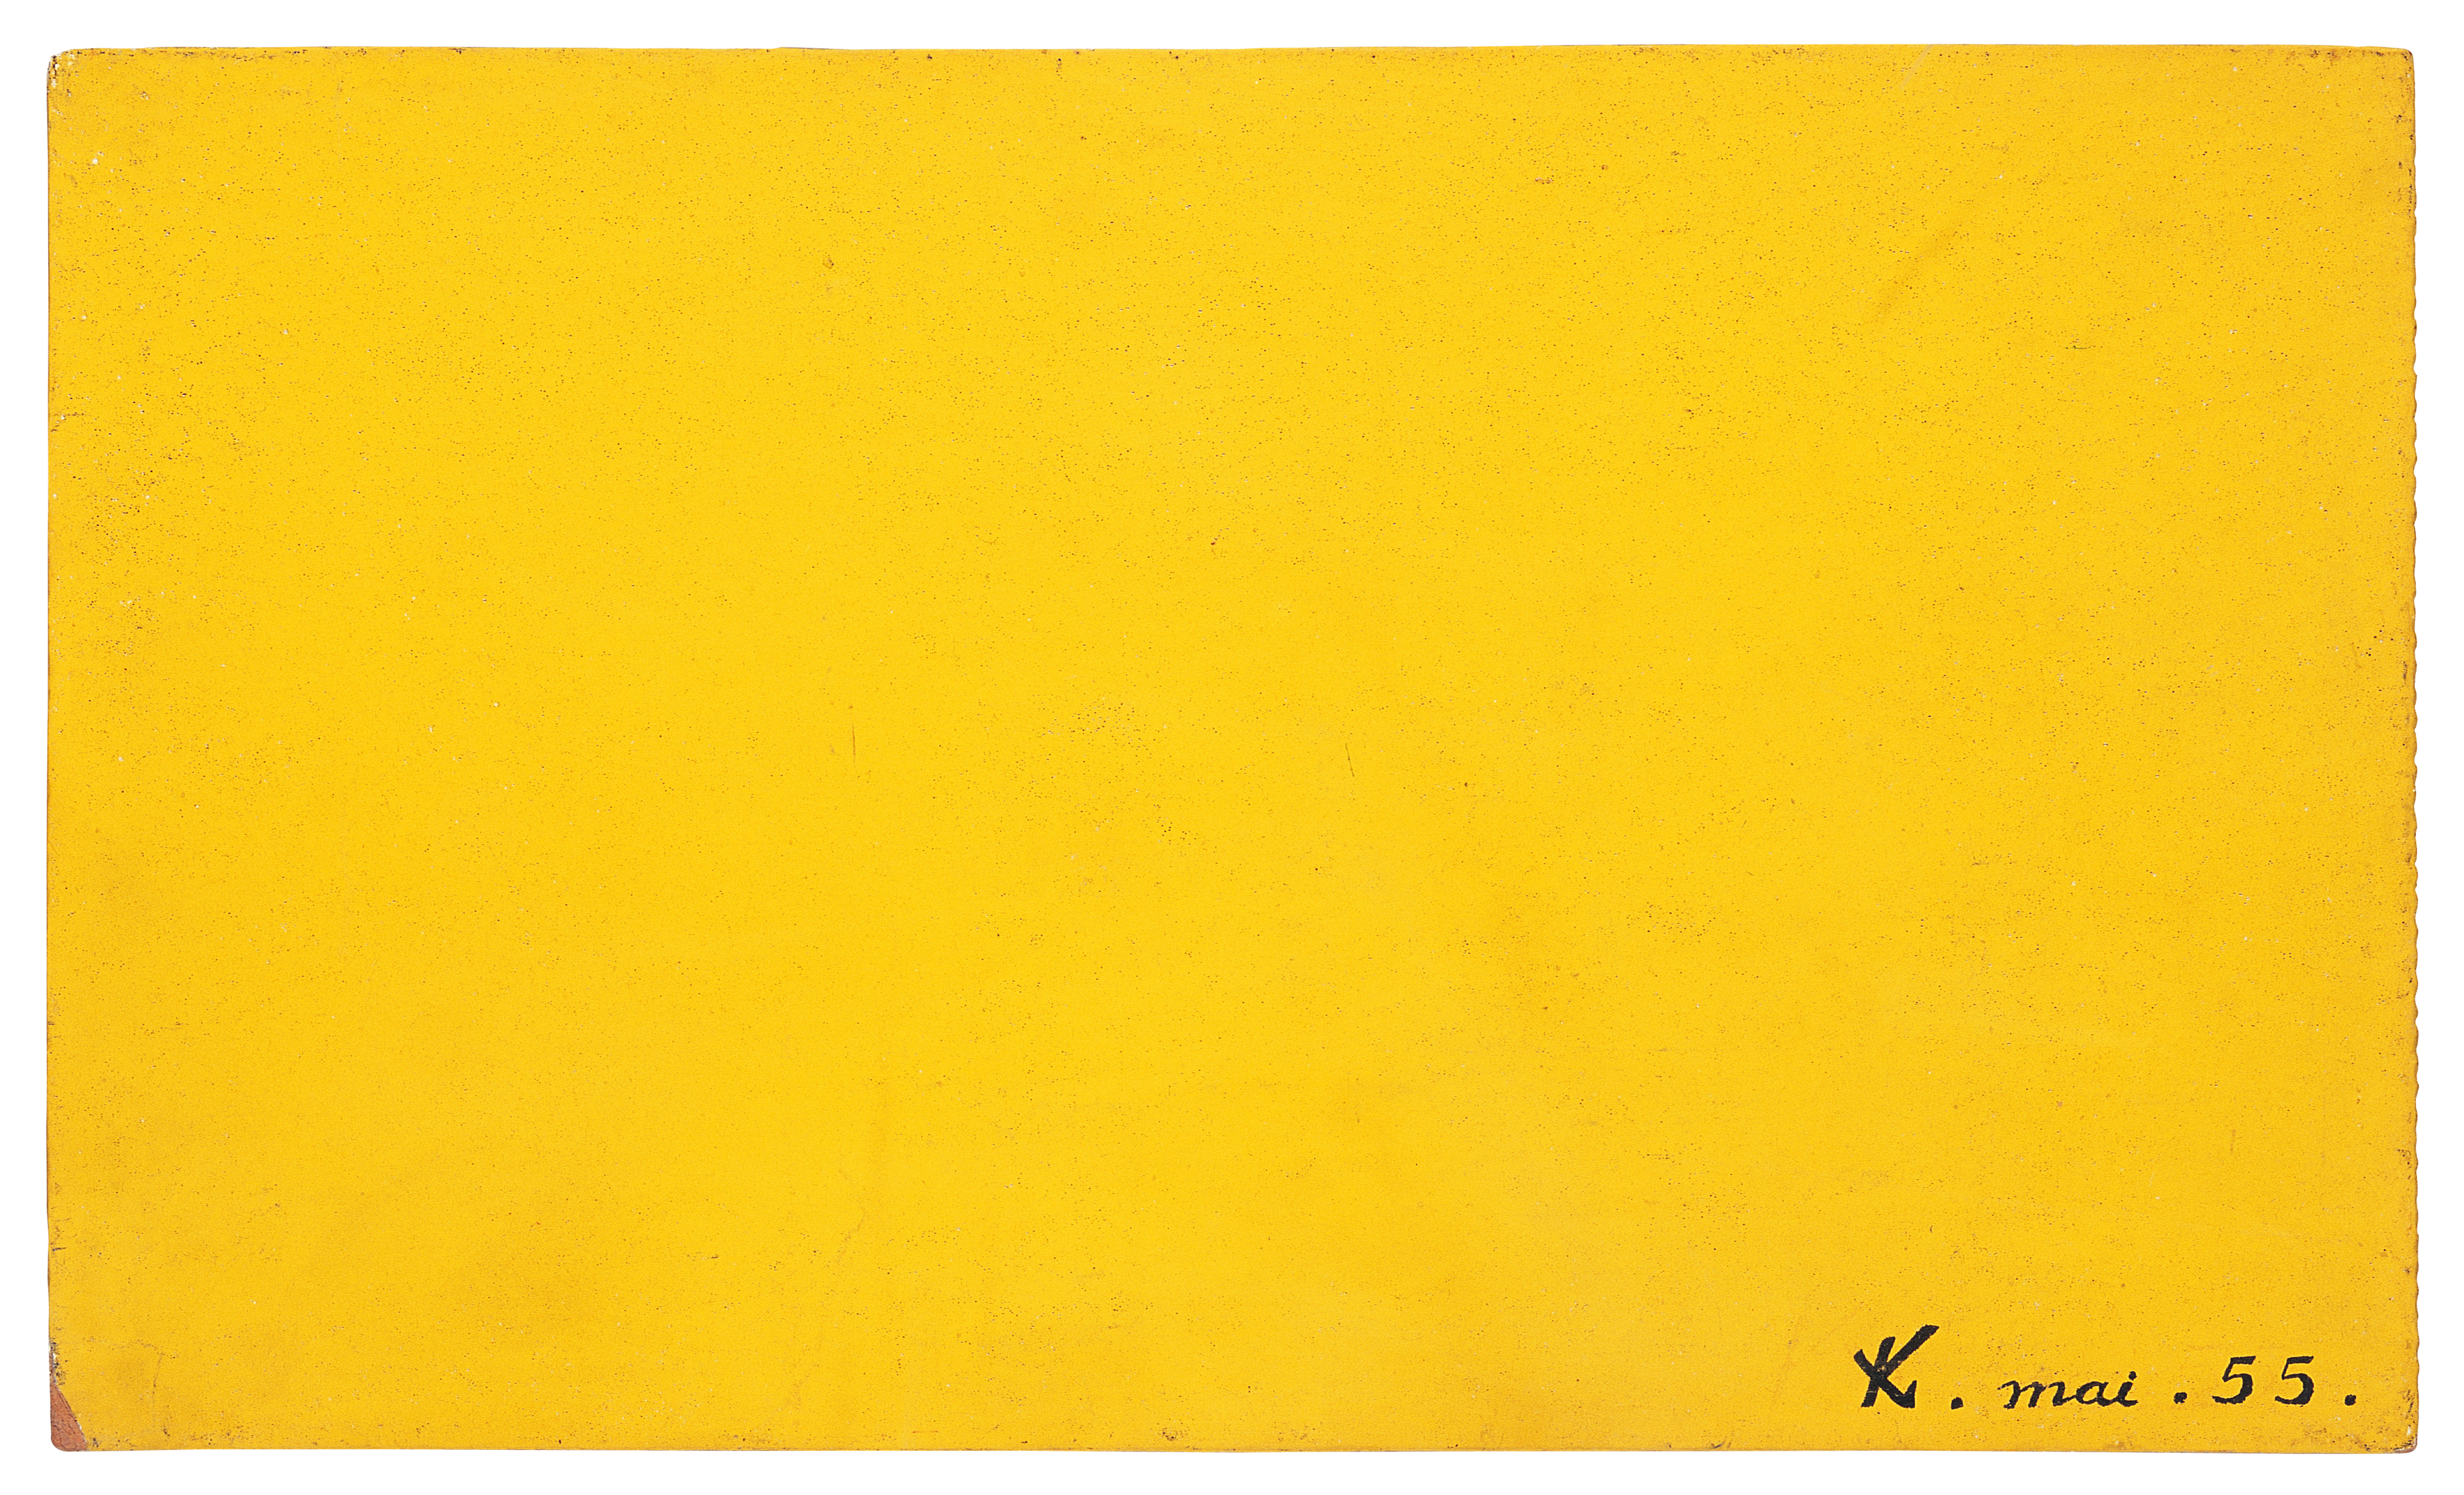 Untitled Yellow Monochrome